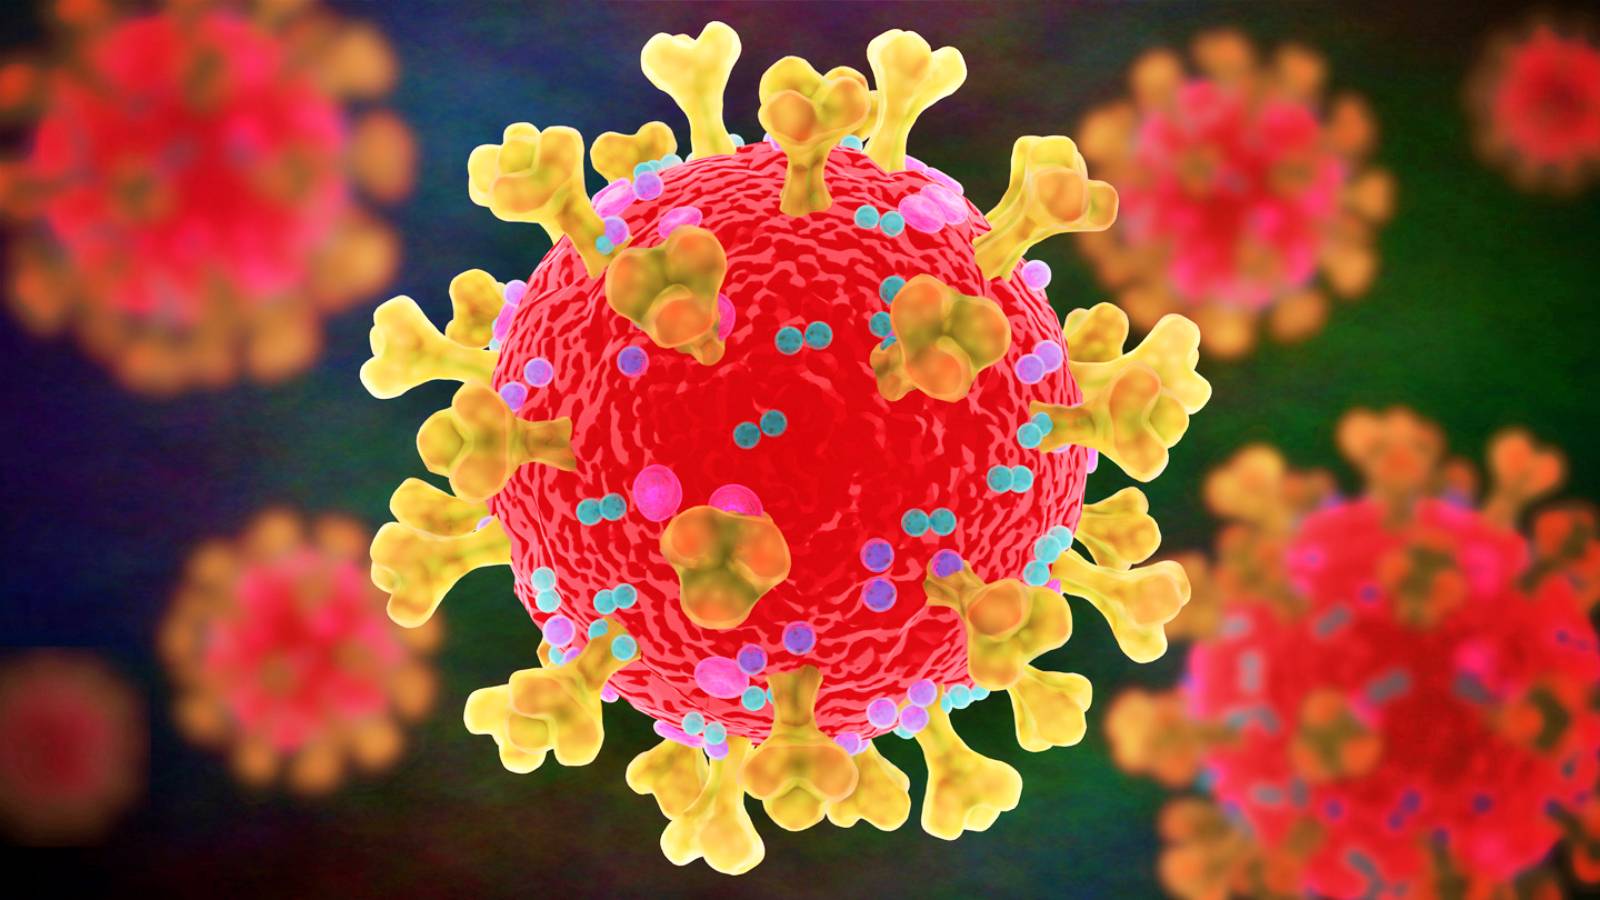 Coronavirus Romania Cazurile Noi Inregistrate in 11 Octombrie 2021